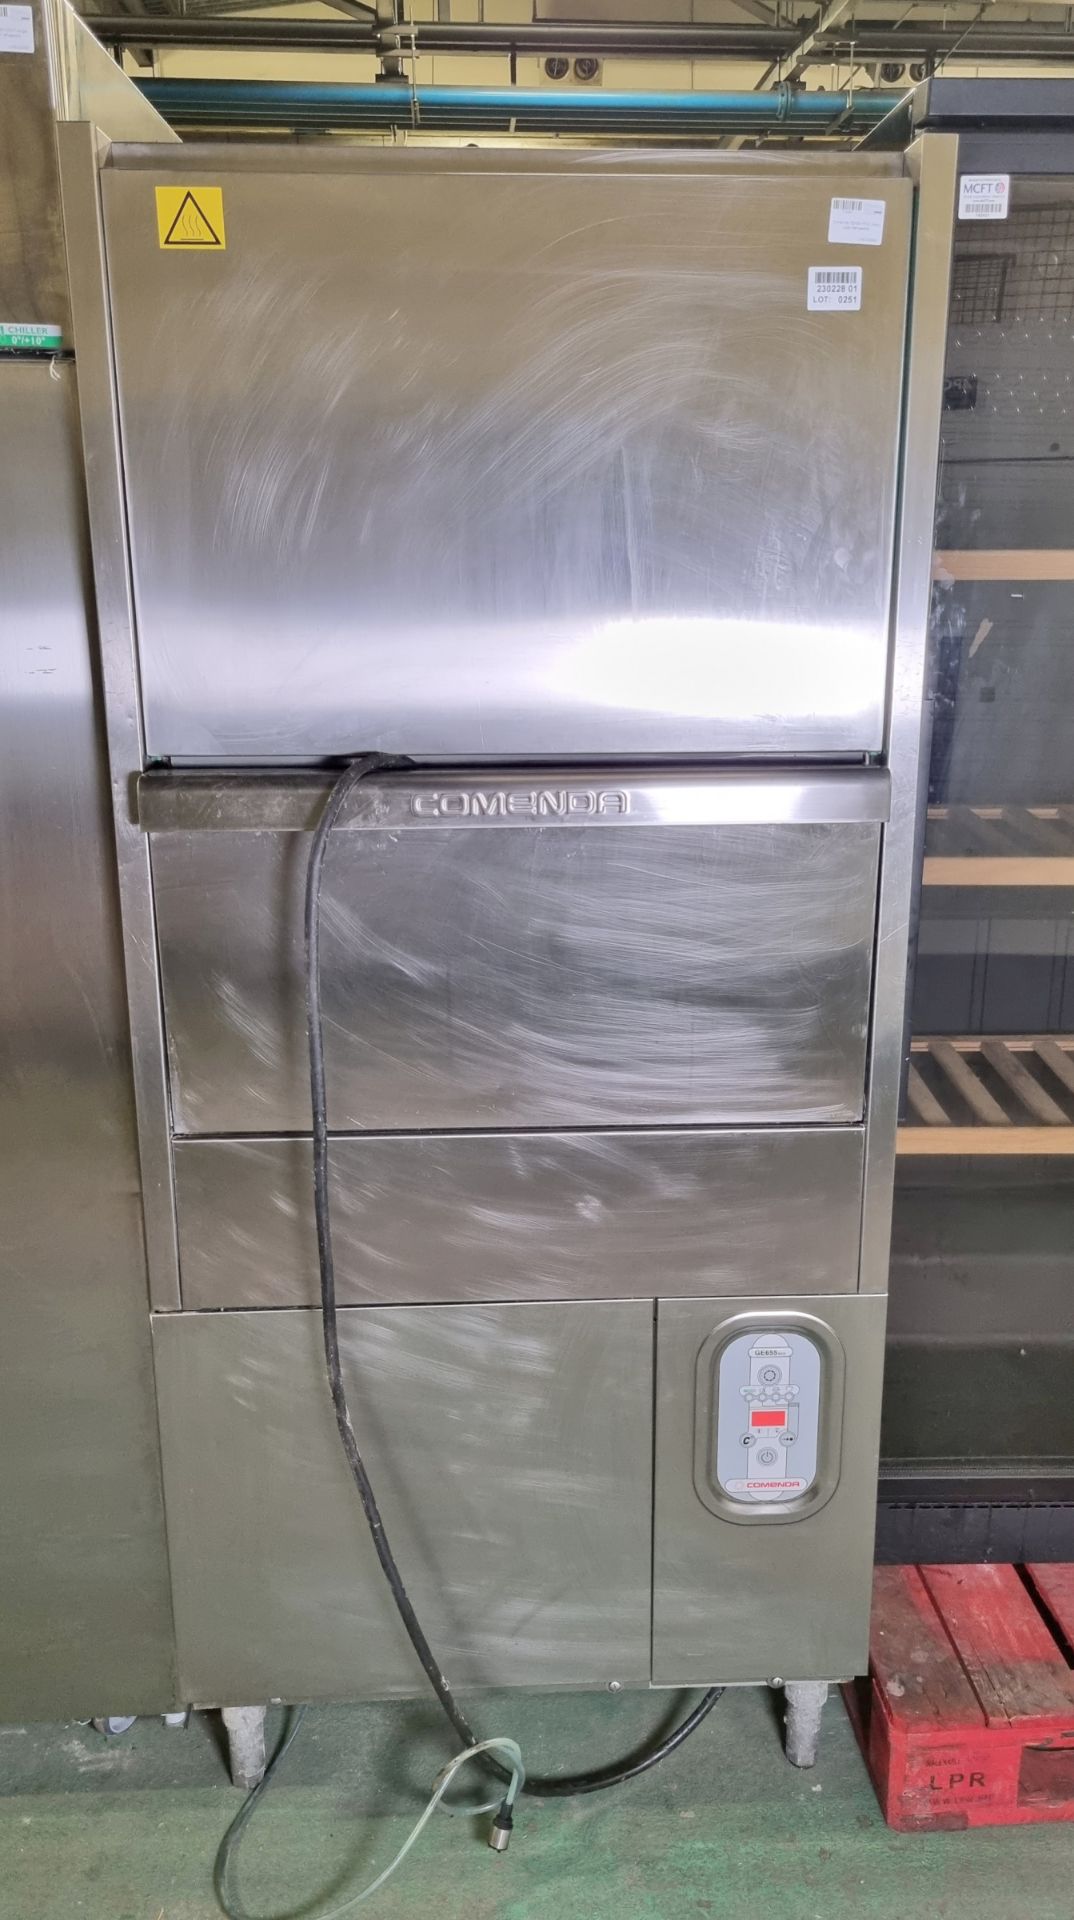 Comenda GE655 RCD hood-type dishwasher